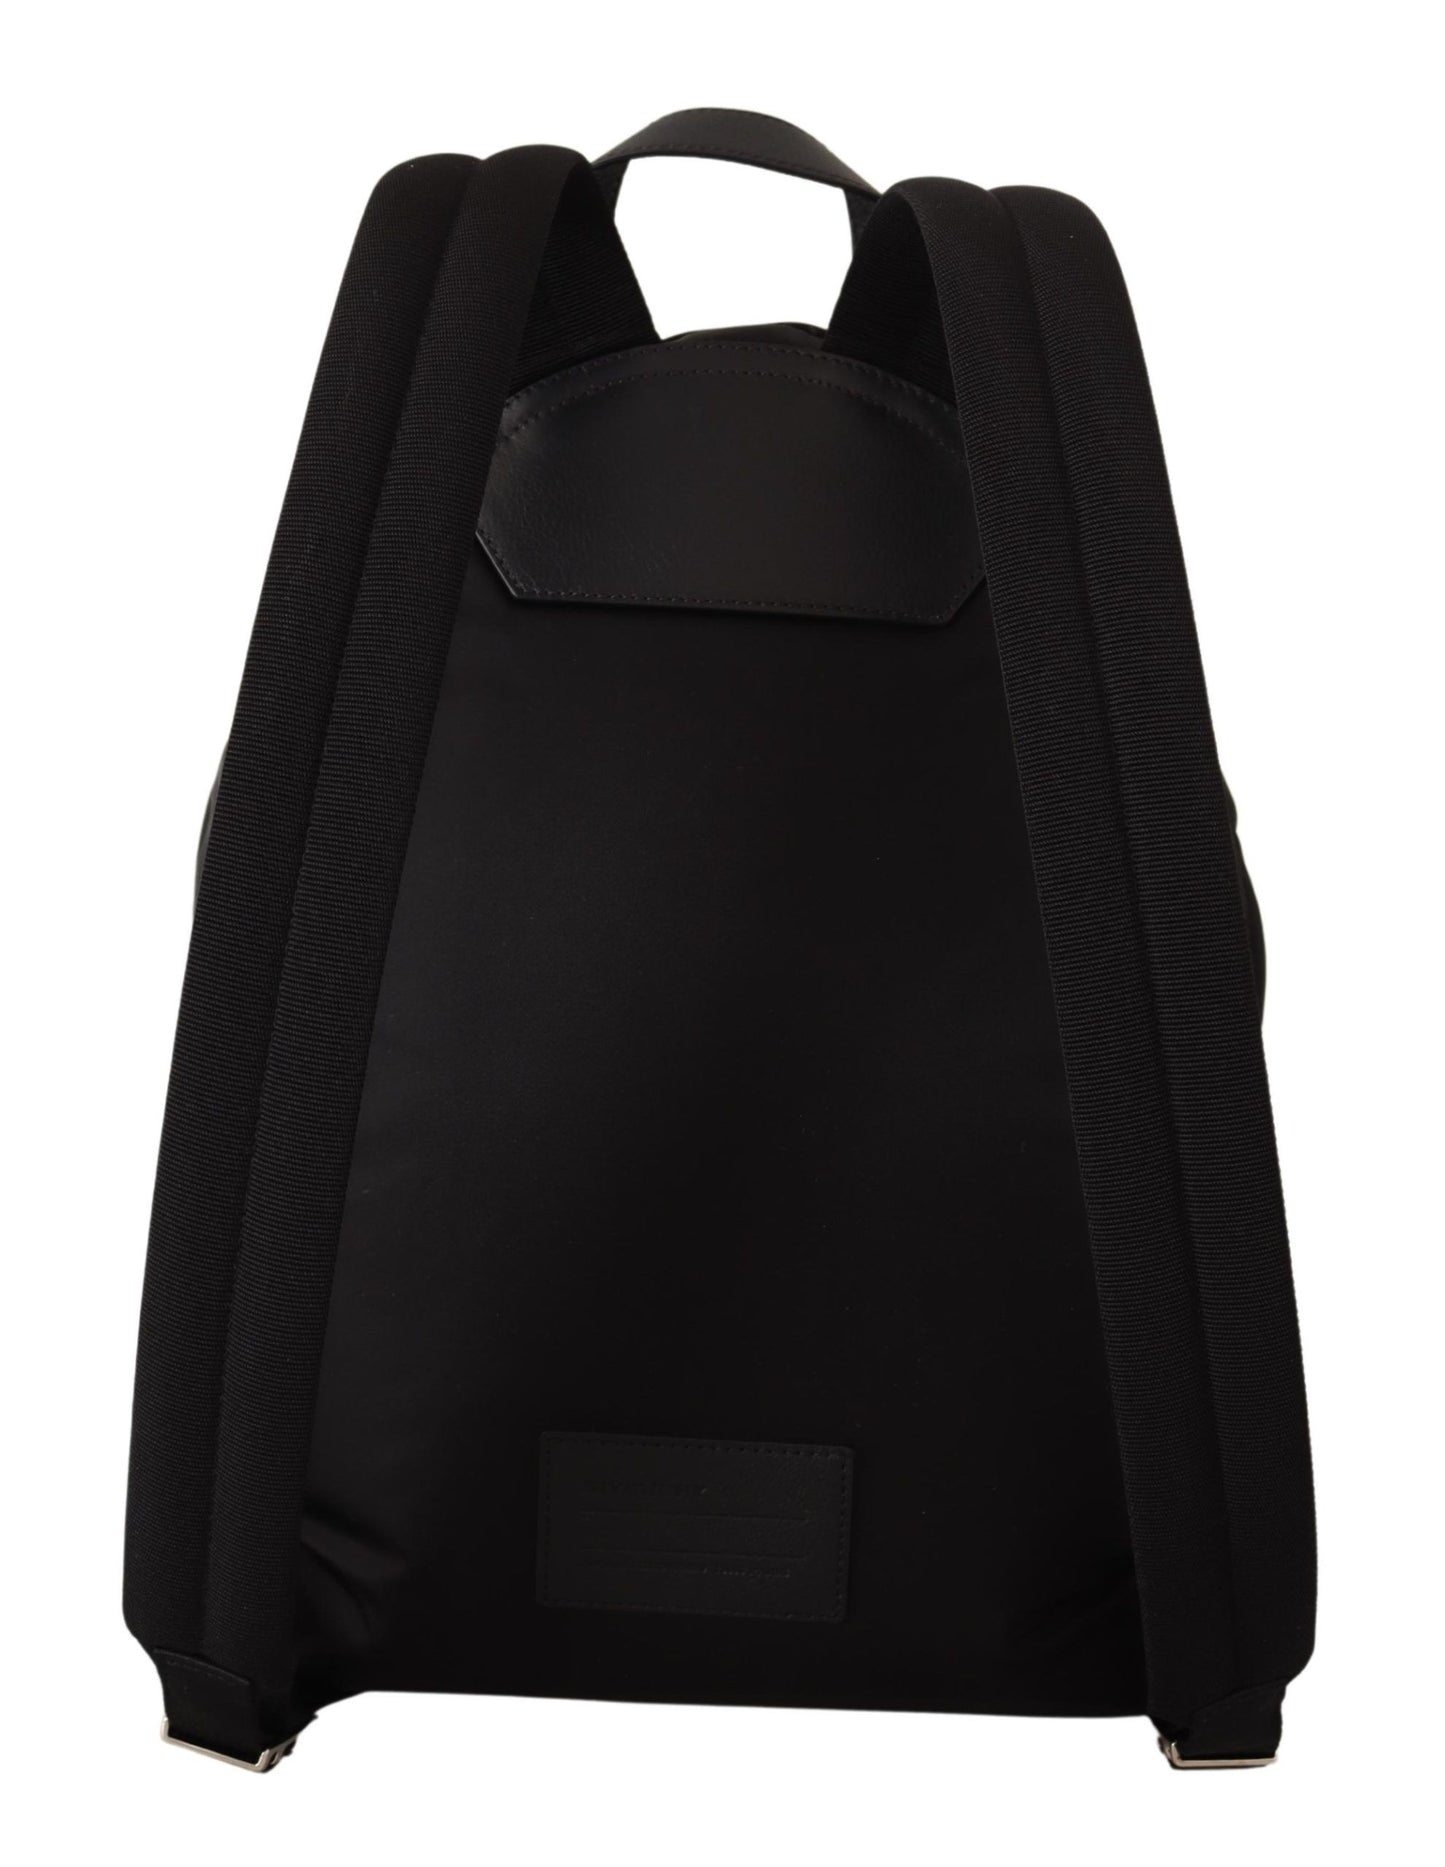 Elegant Urban Style Designer Backpack